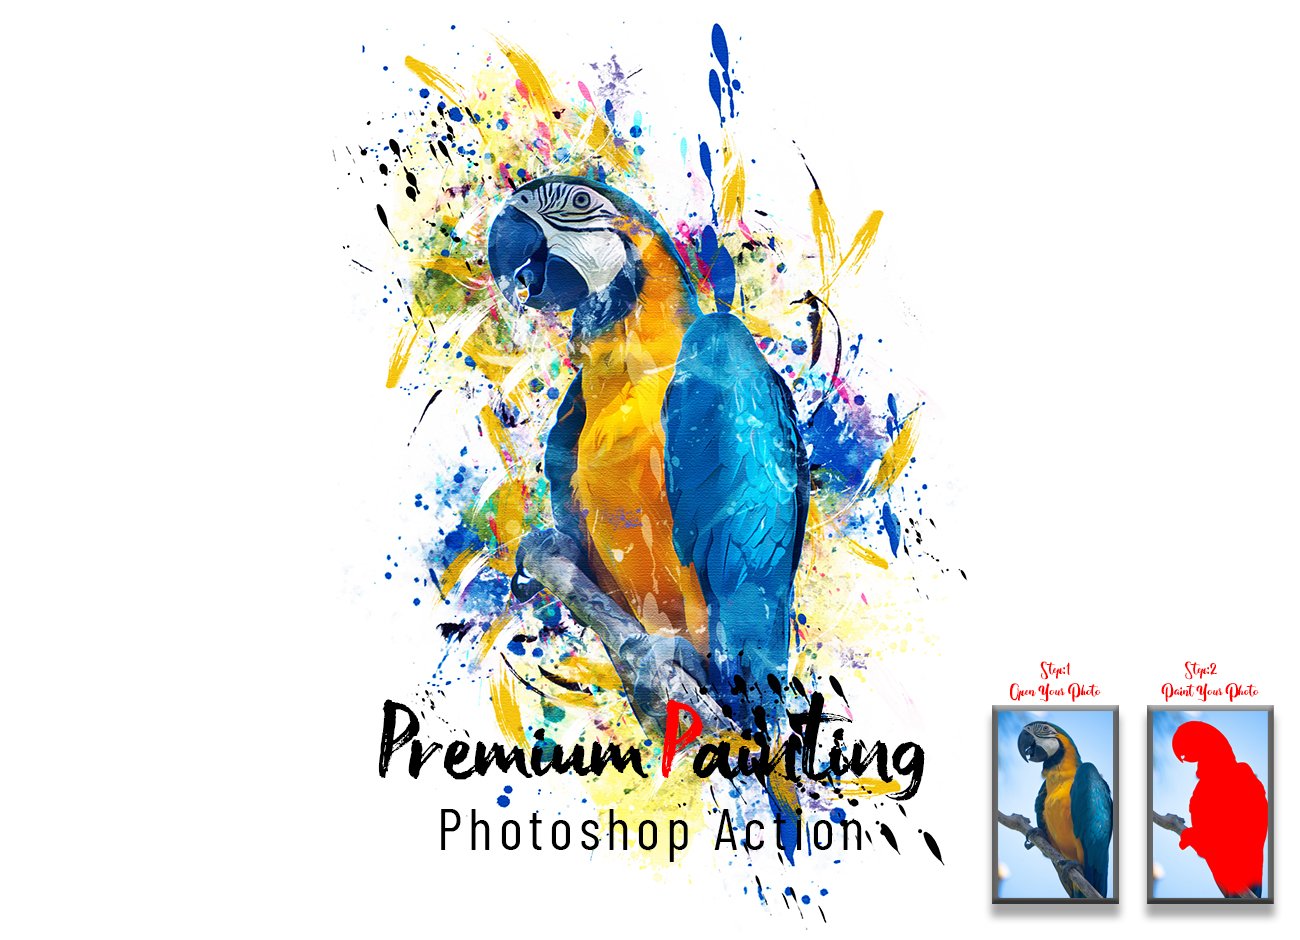 Premium Painting Photoshop Actioncover image.